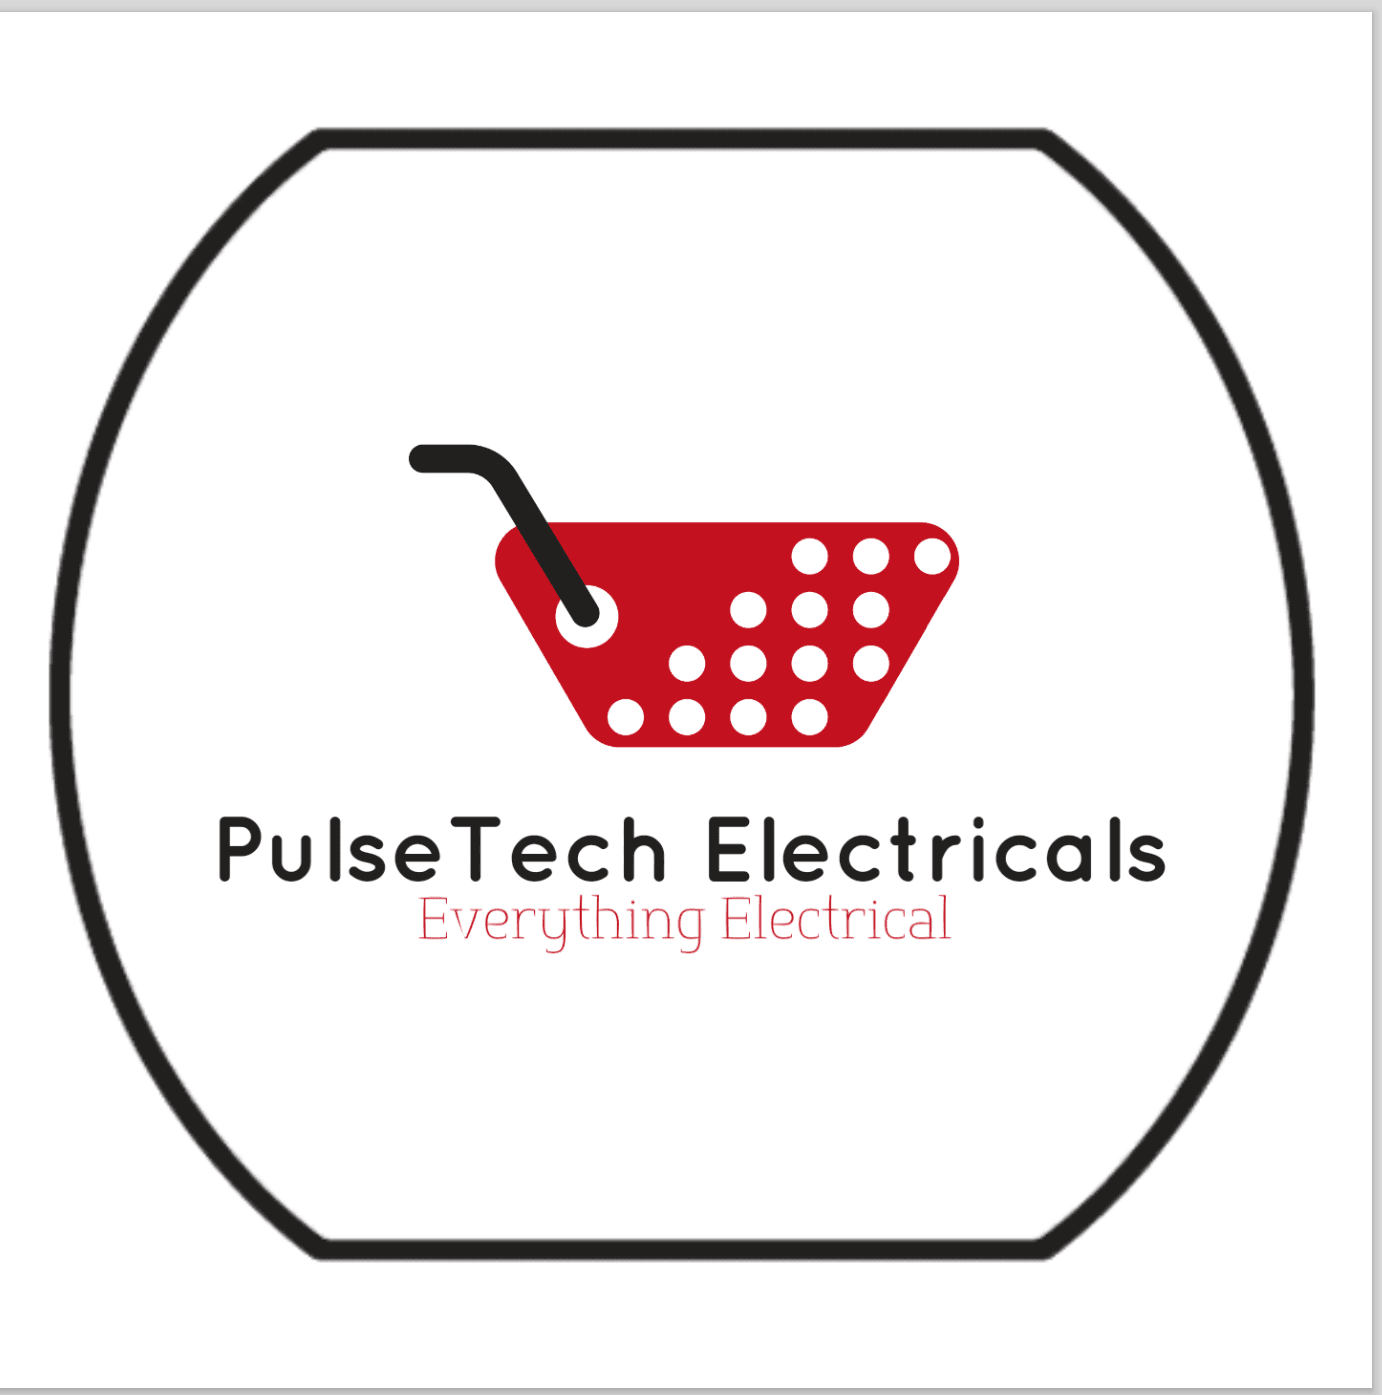 Pulse Tech Electricals